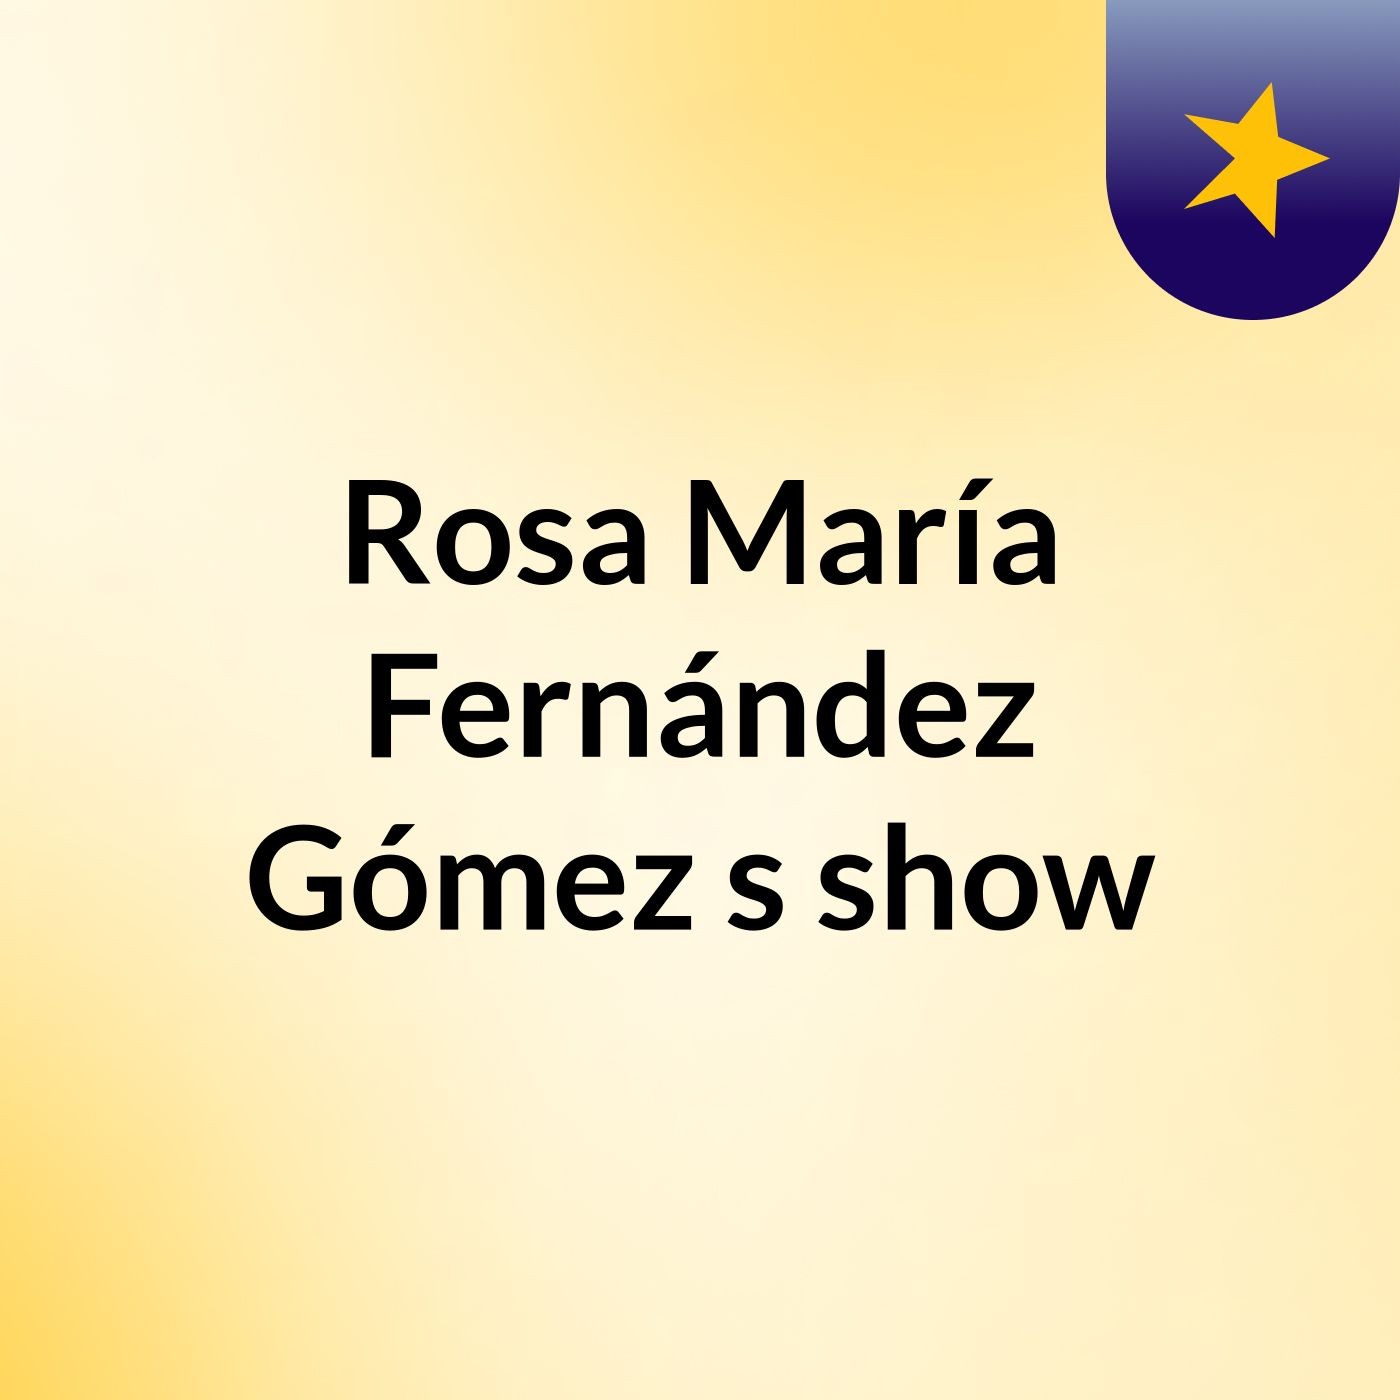 Rosa María Fernández Gómez's show